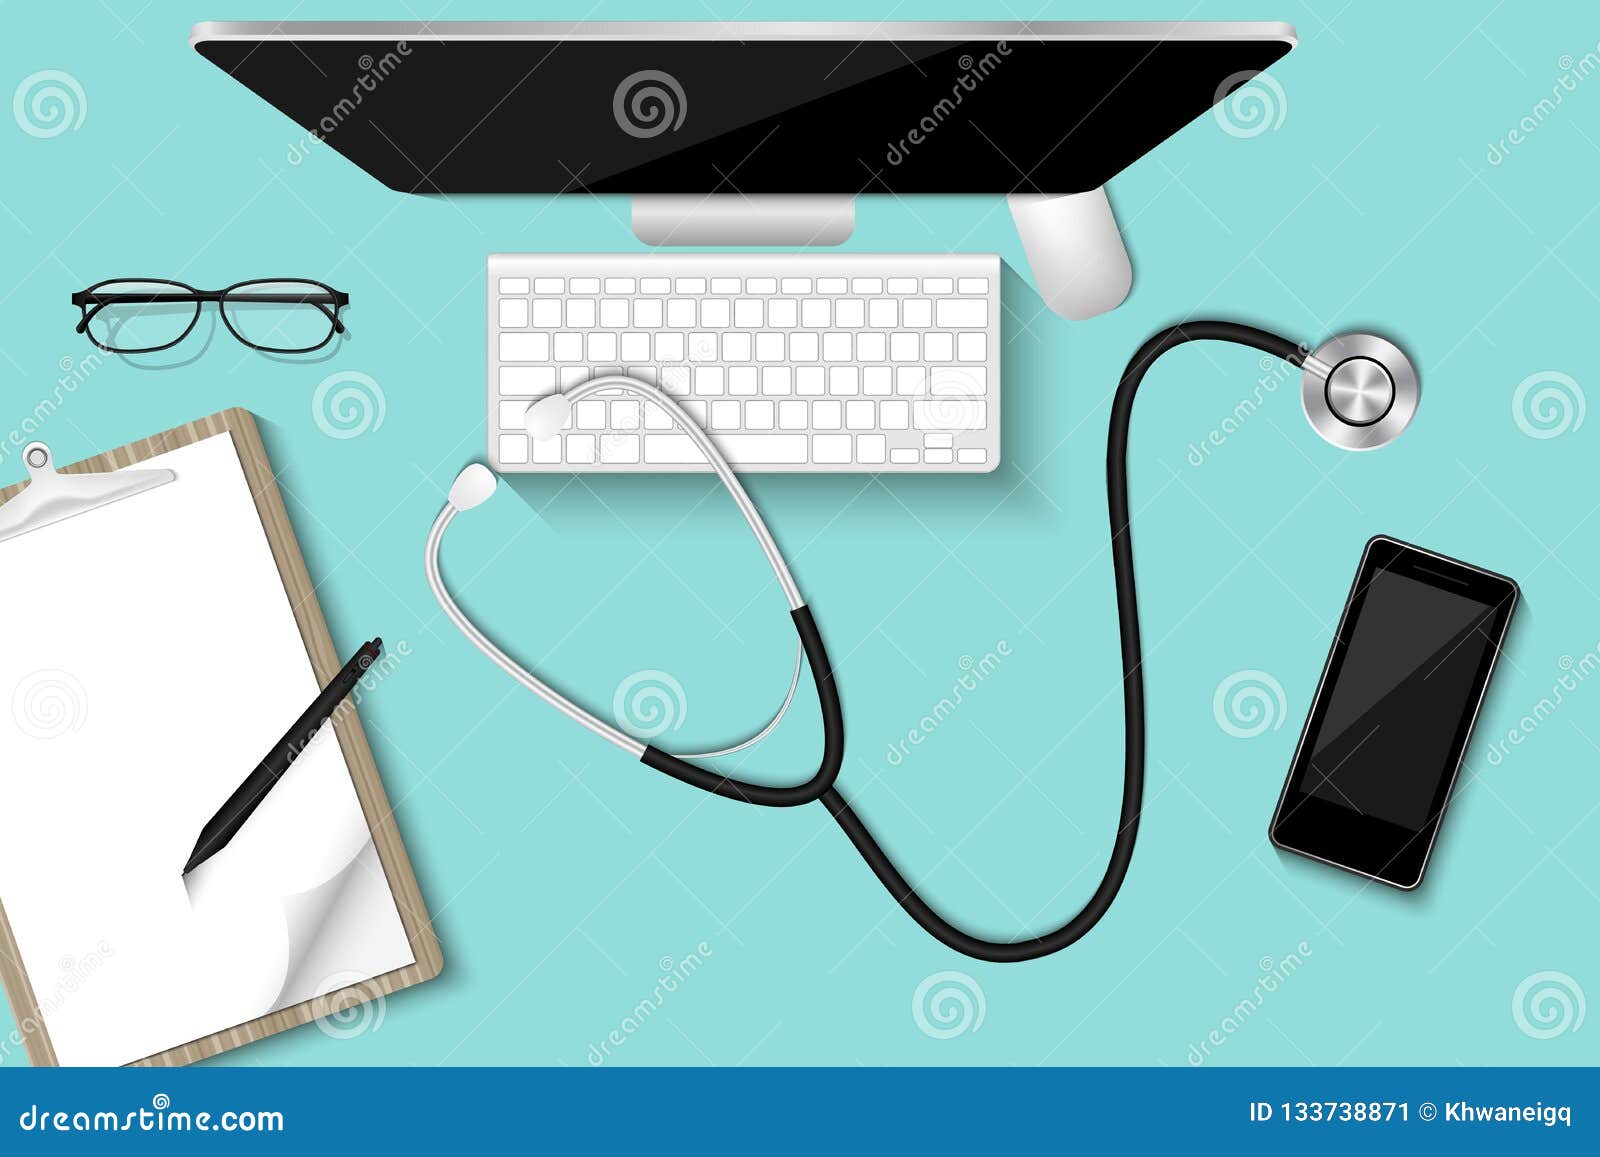 doctorÃ¢â¬â¢s table desktop with personal equipment., healthcare an